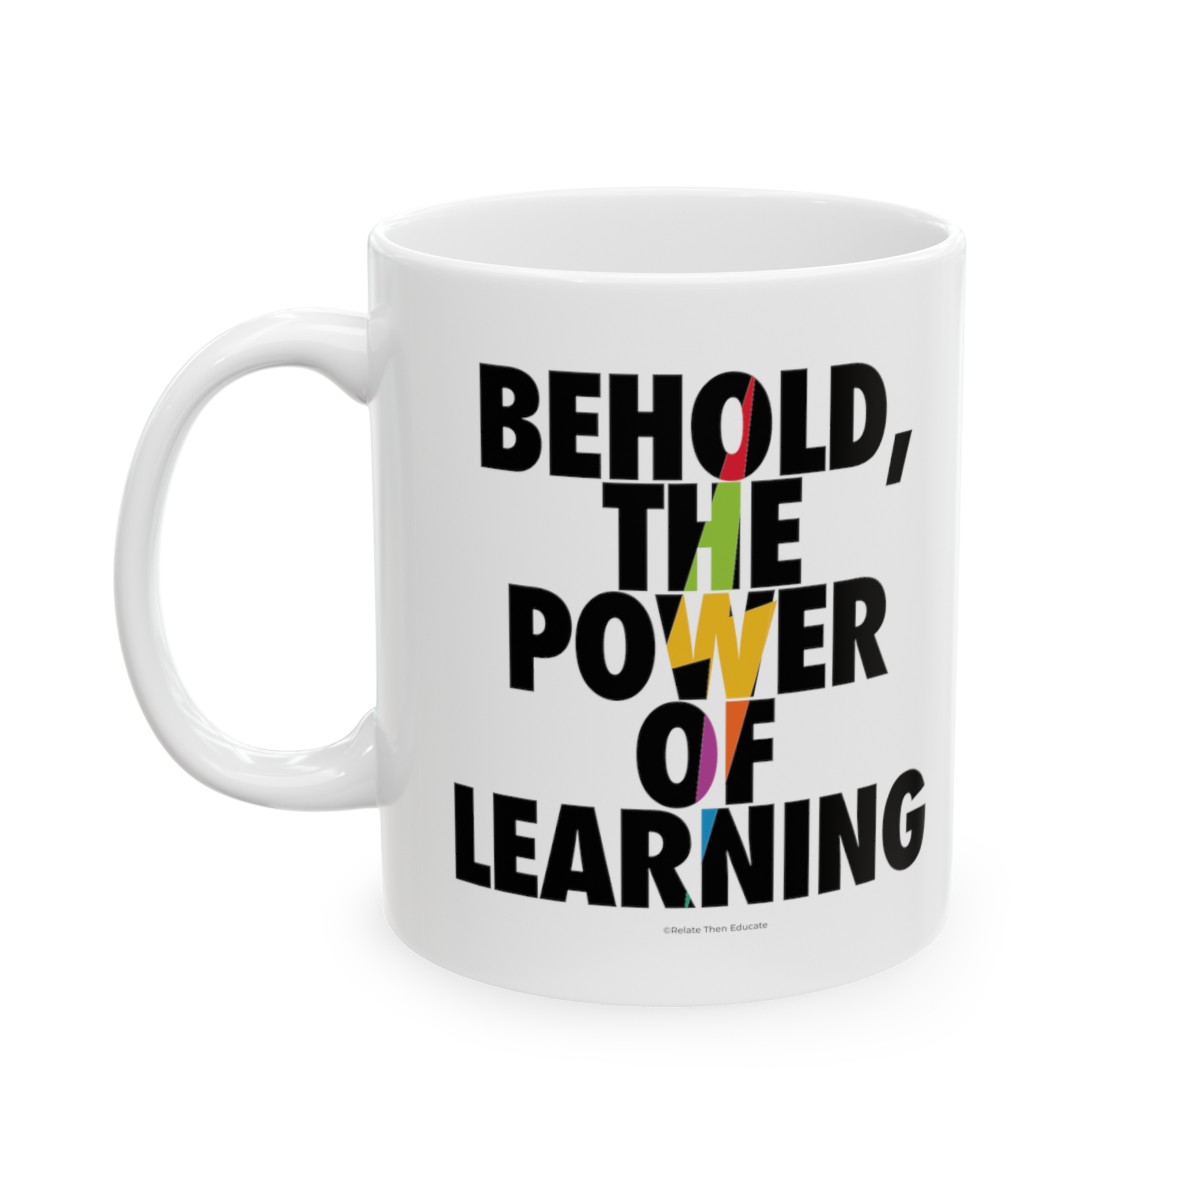 The Power of Learning - 11oz White Mug for Teachers product thumbnail image